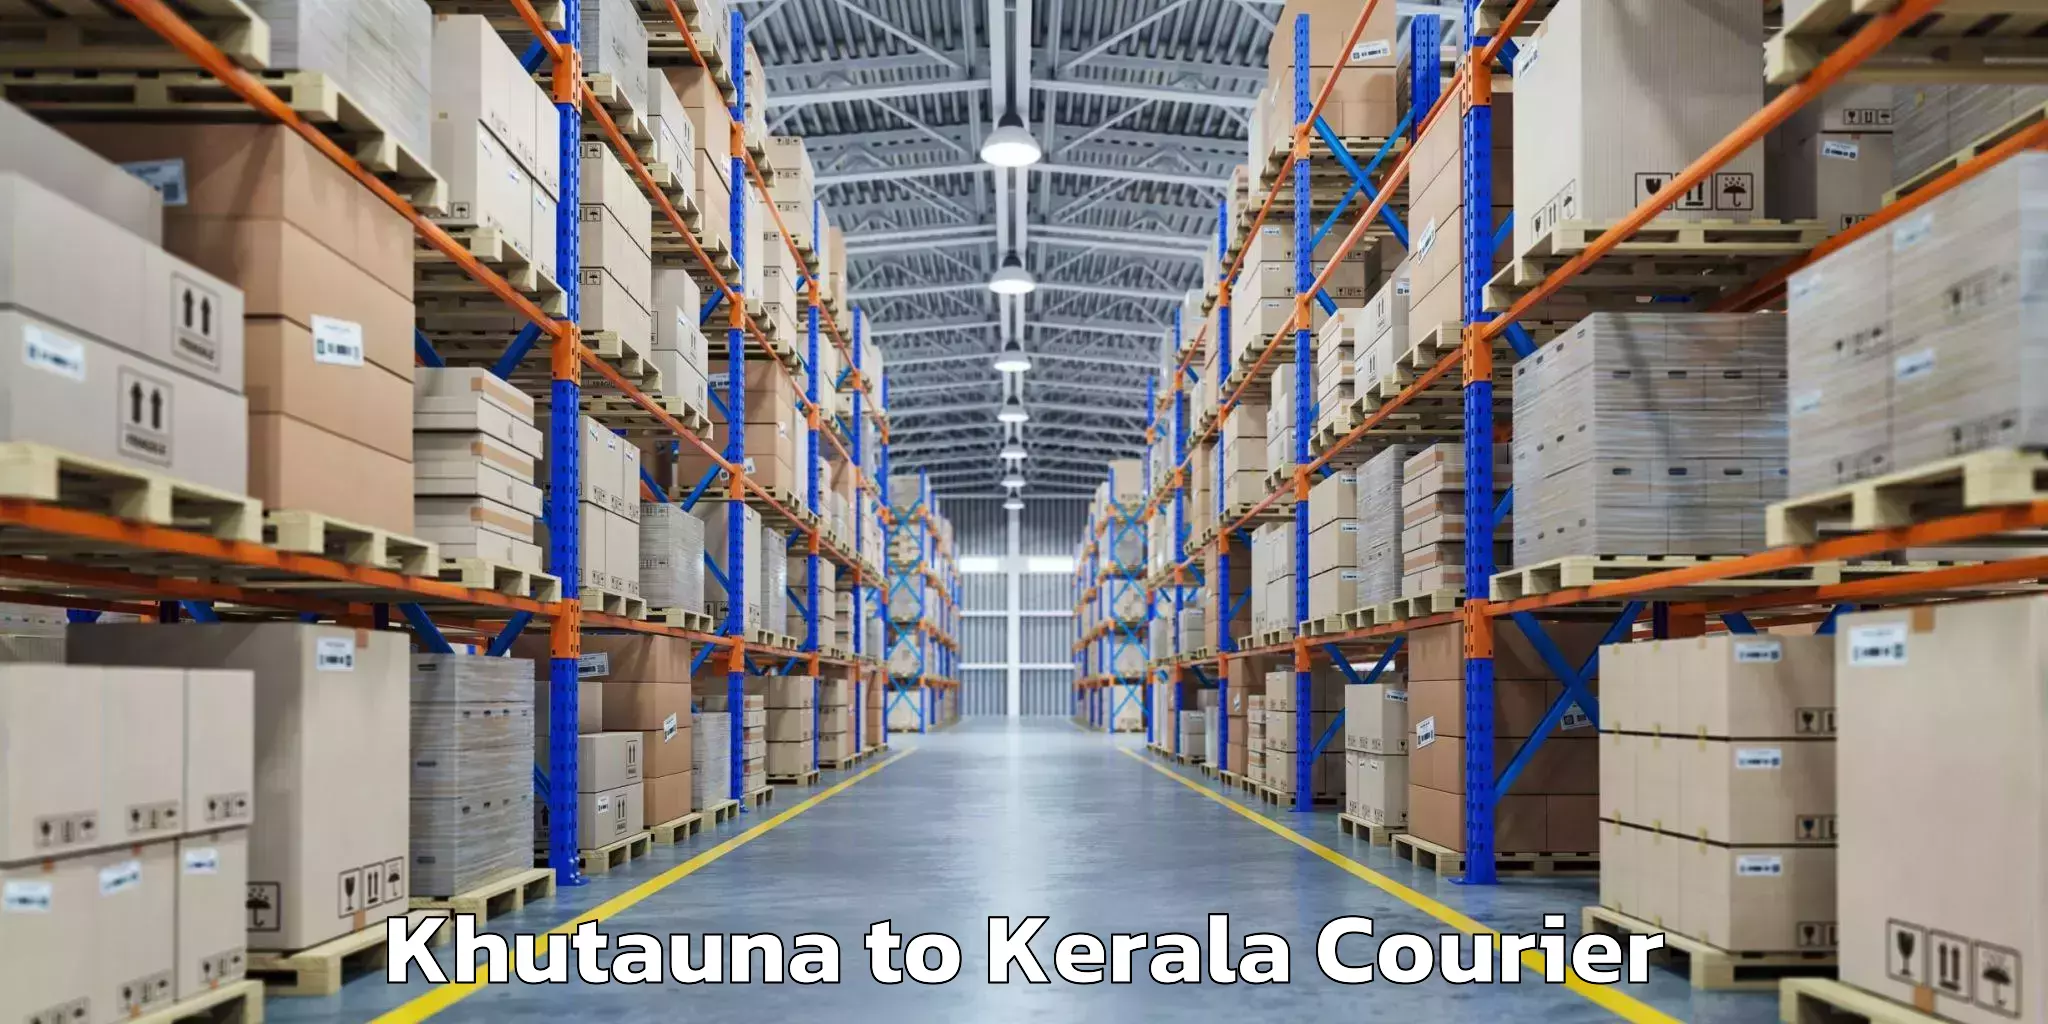 Baggage transport network Khutauna to Kerala